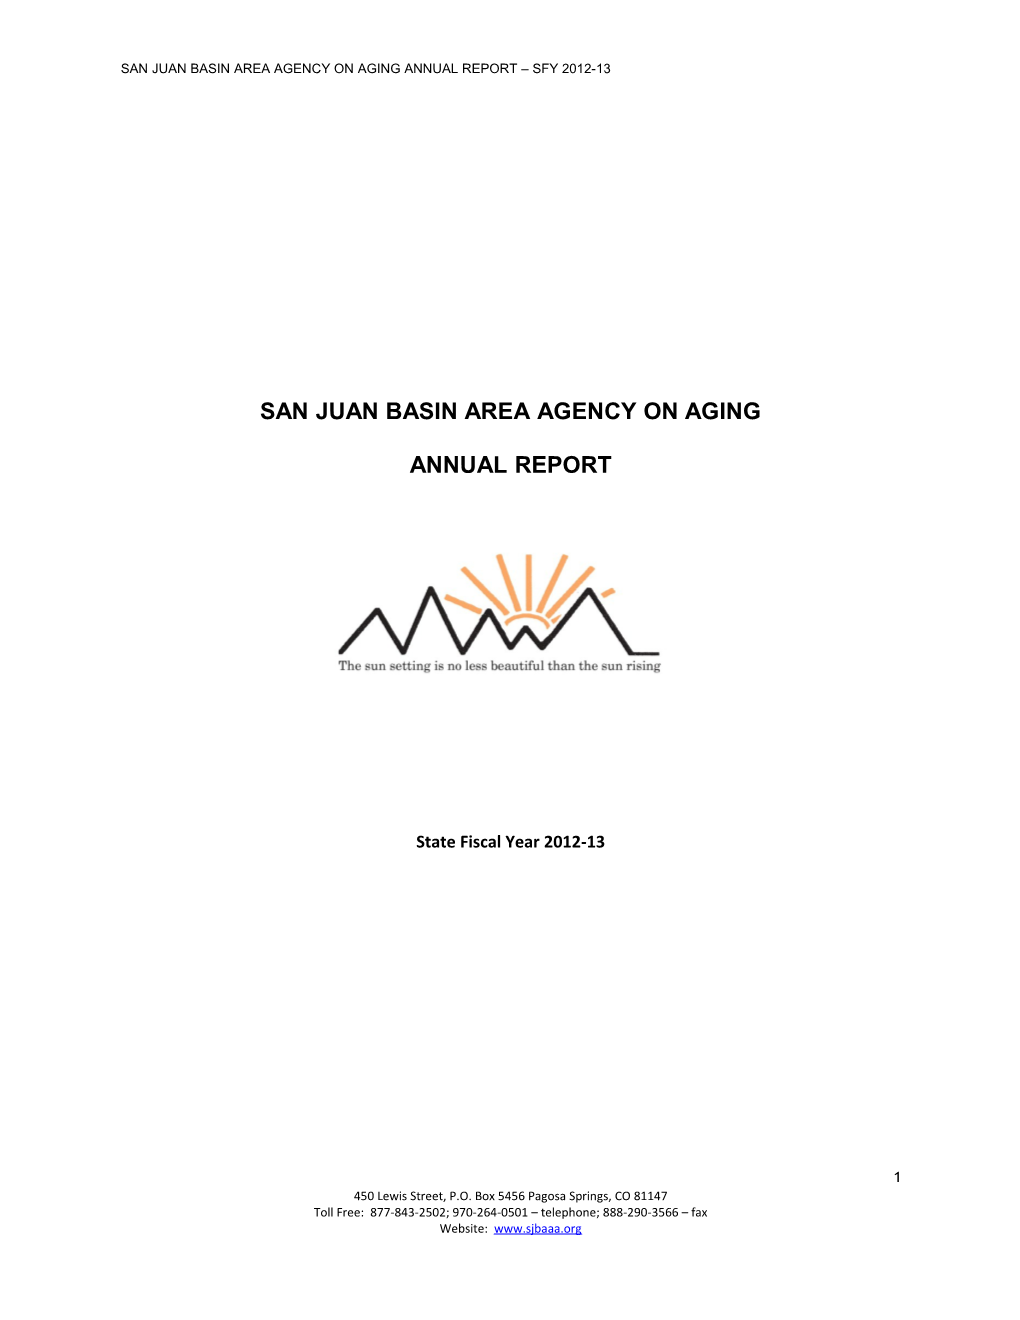 San Juan Basin Area Agency on Aging Annual Report Sfy 2012-13